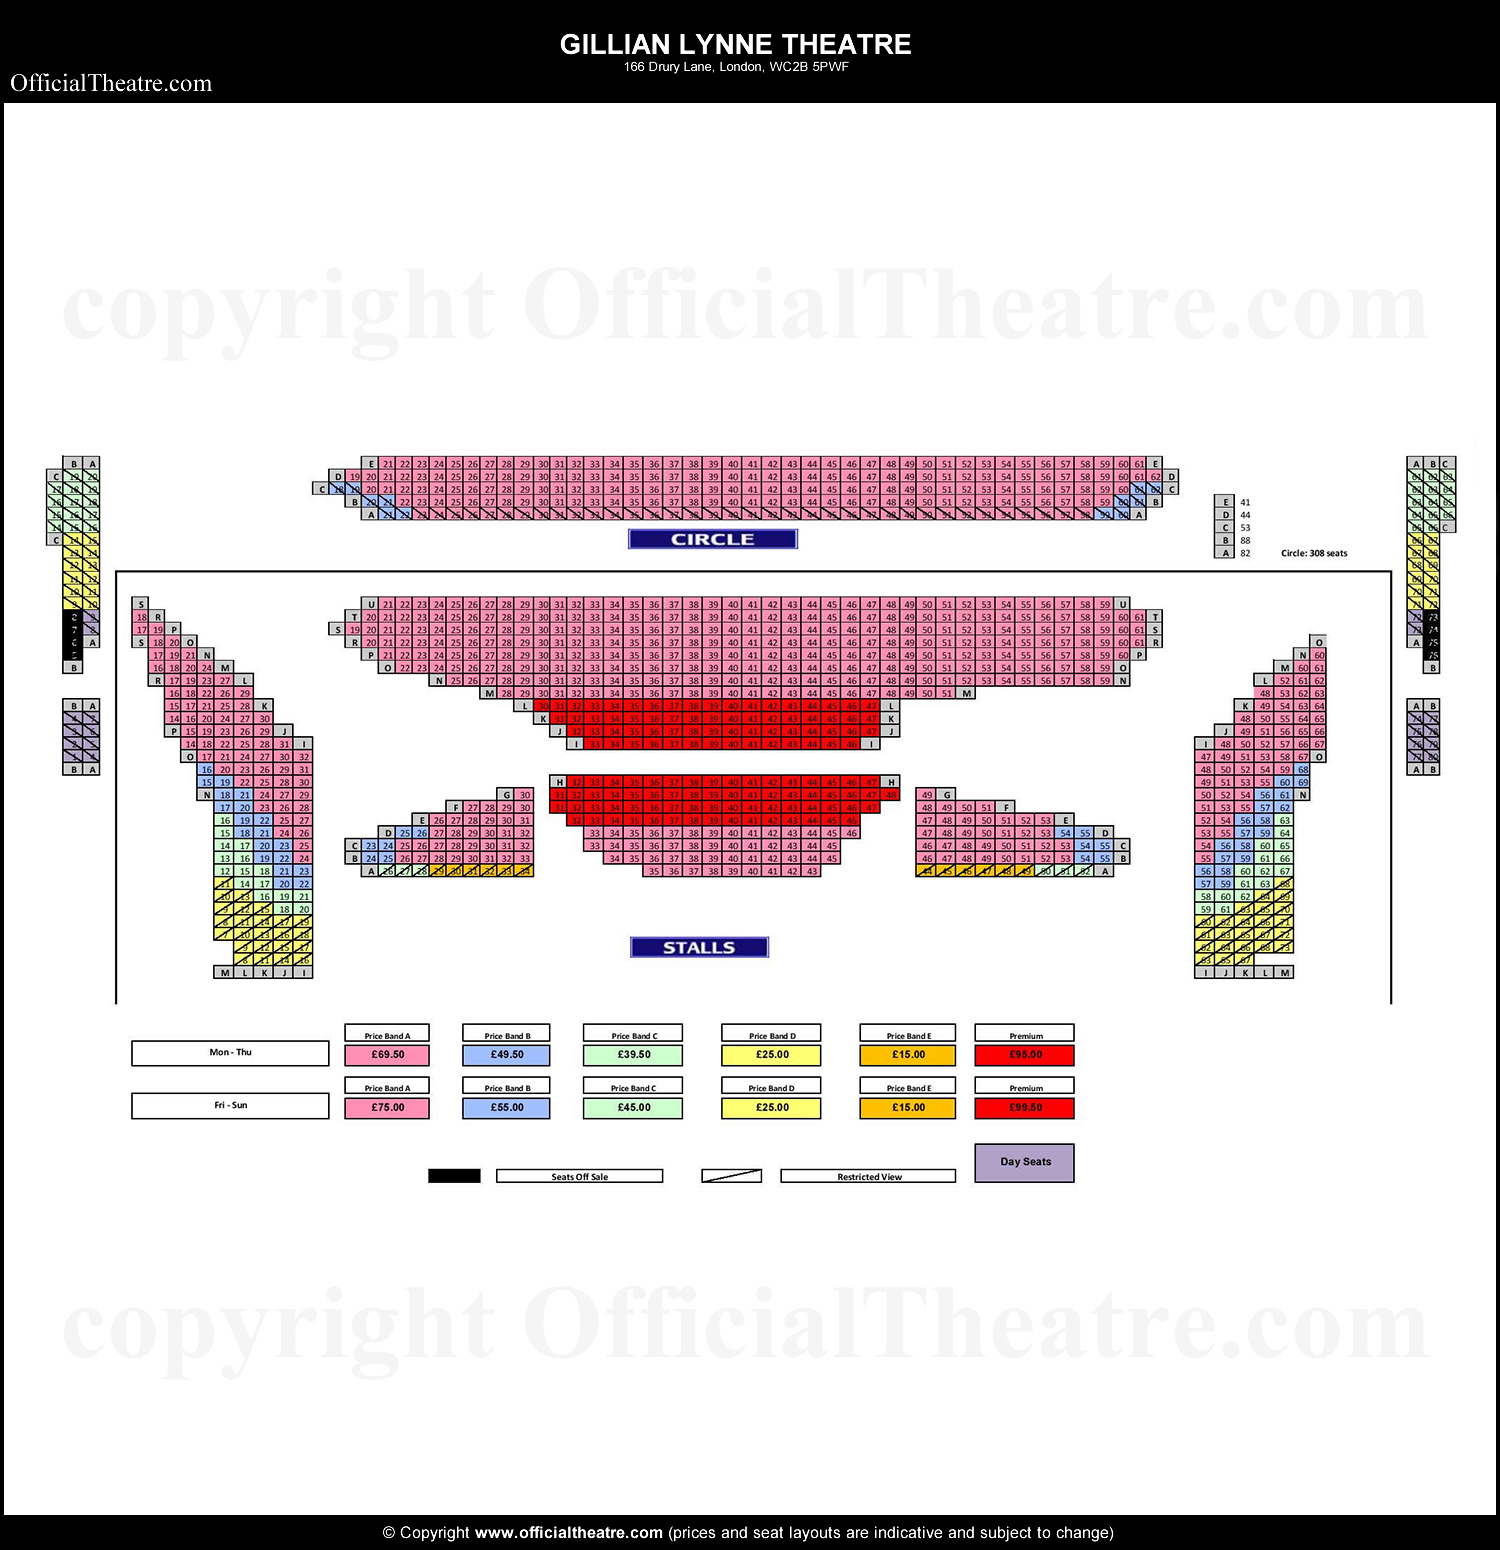 Gillian Lynne Theatre seating plan